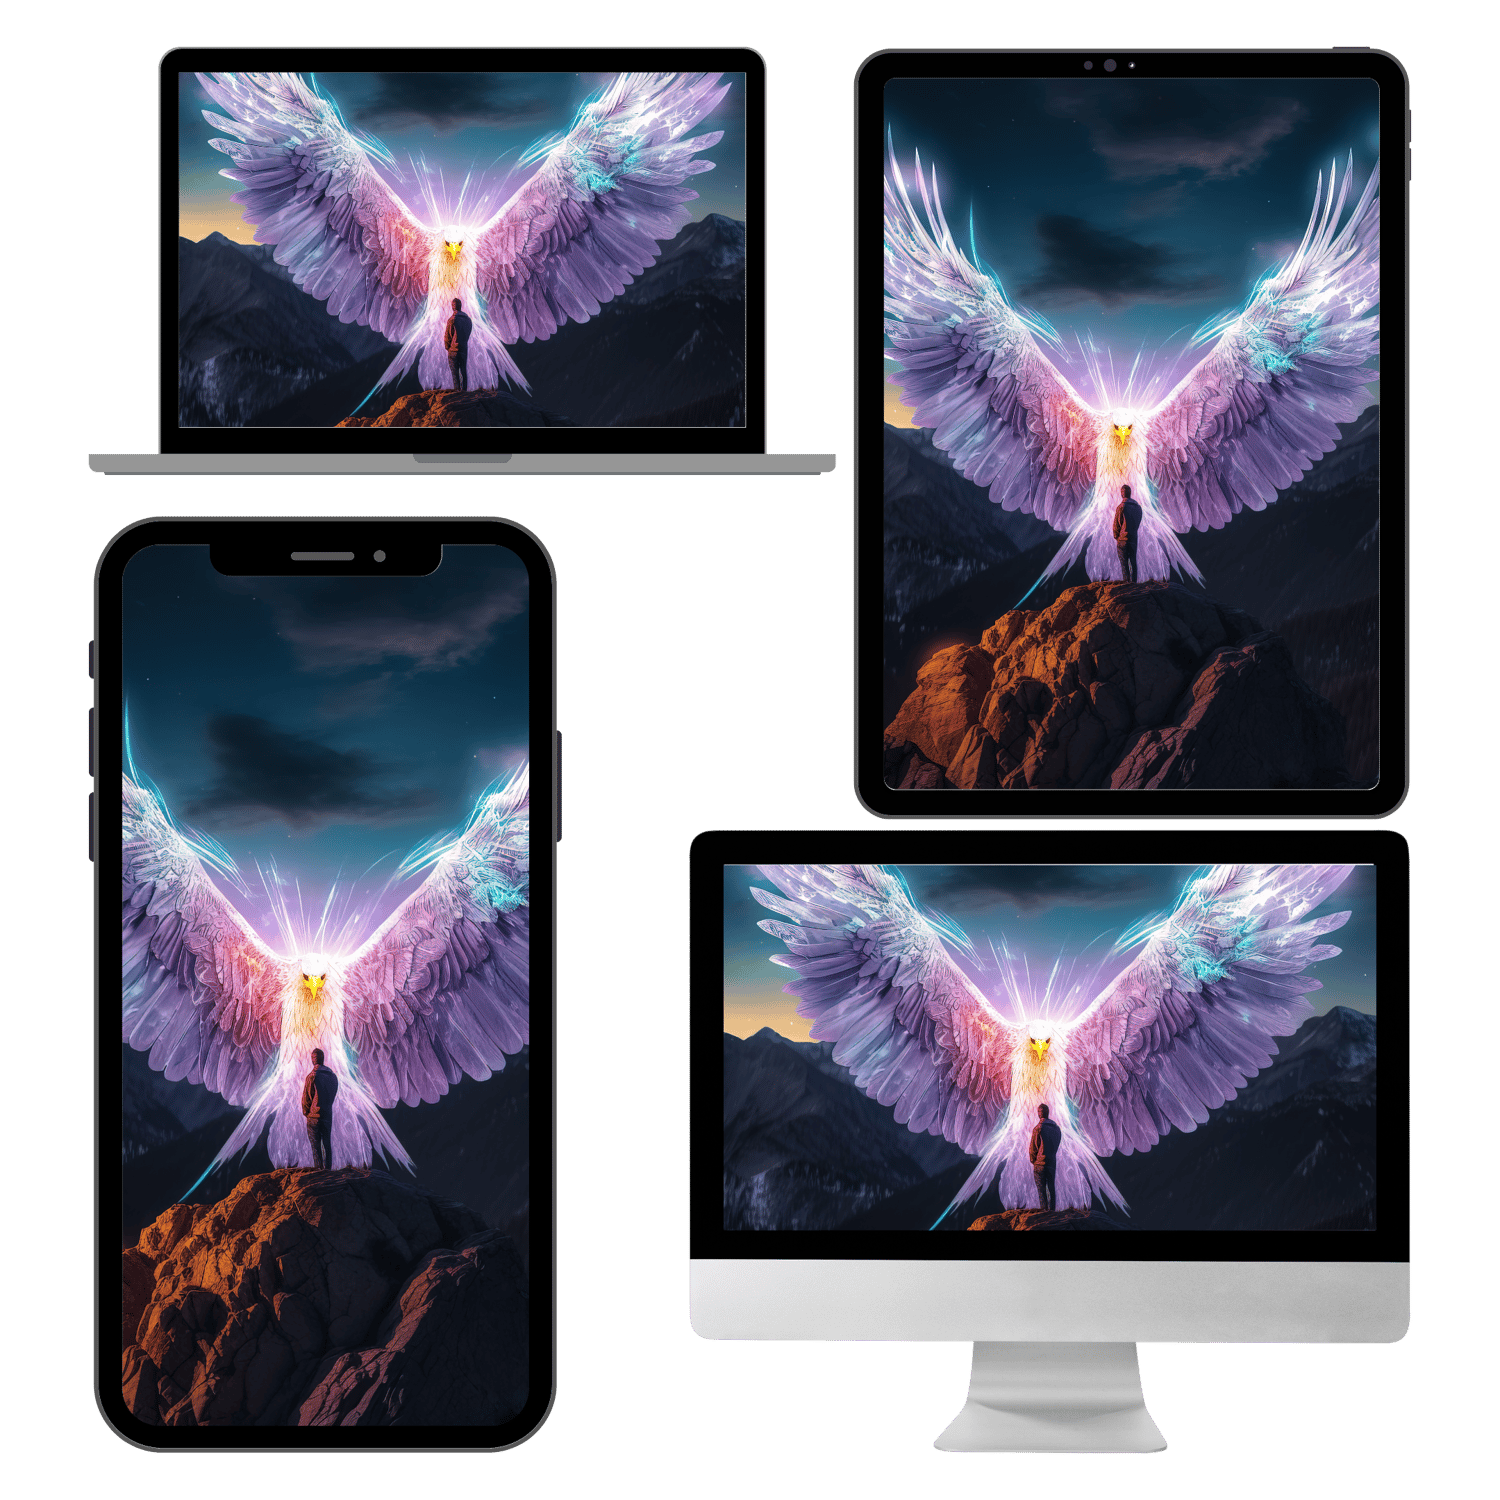 Vow of the disciple desktop+phone wallpaper kit - Brighan⚡'s Ko